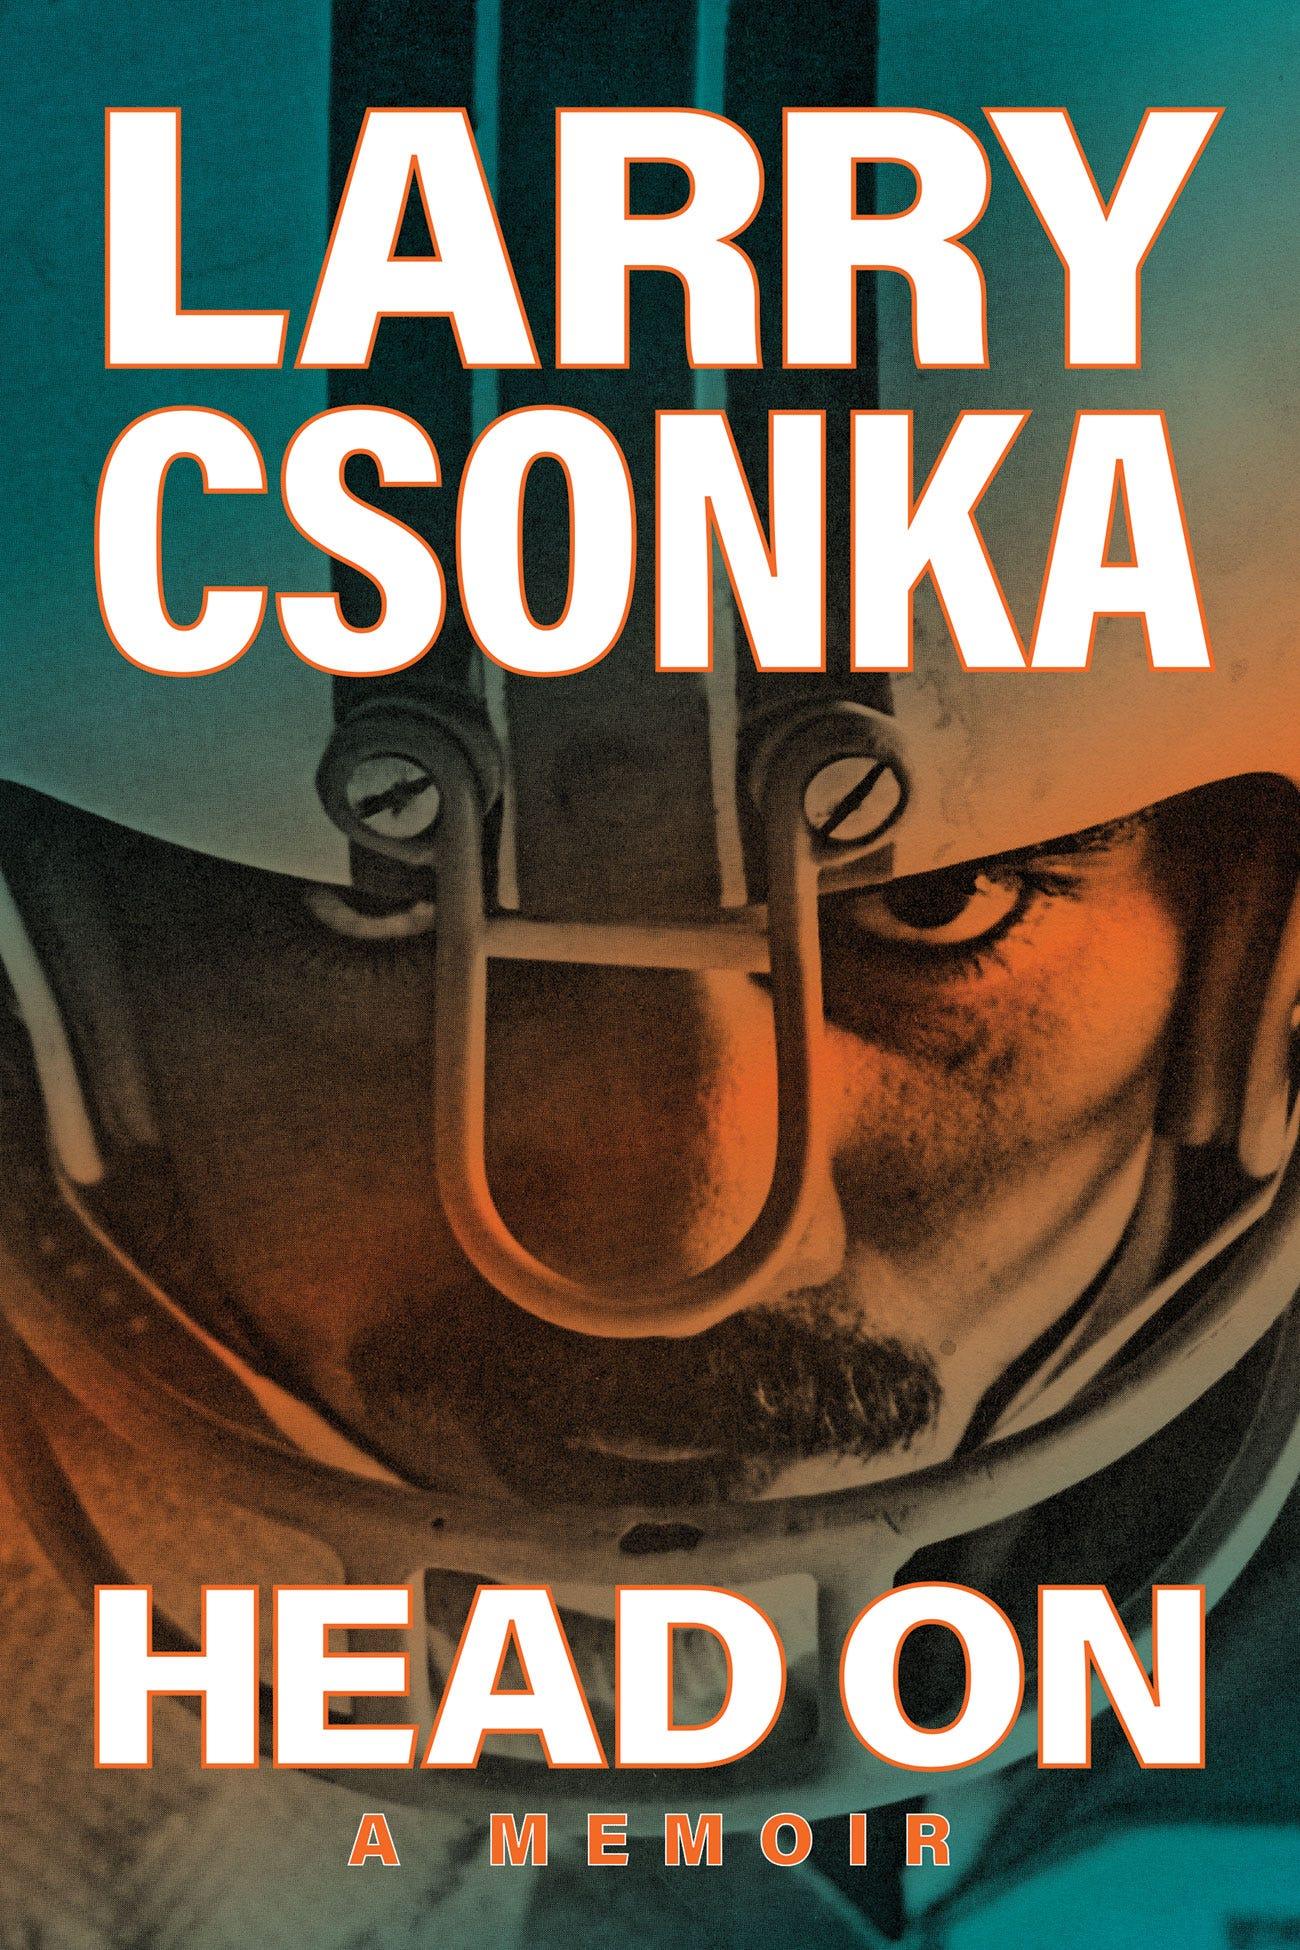 The cover of Larry Csonka